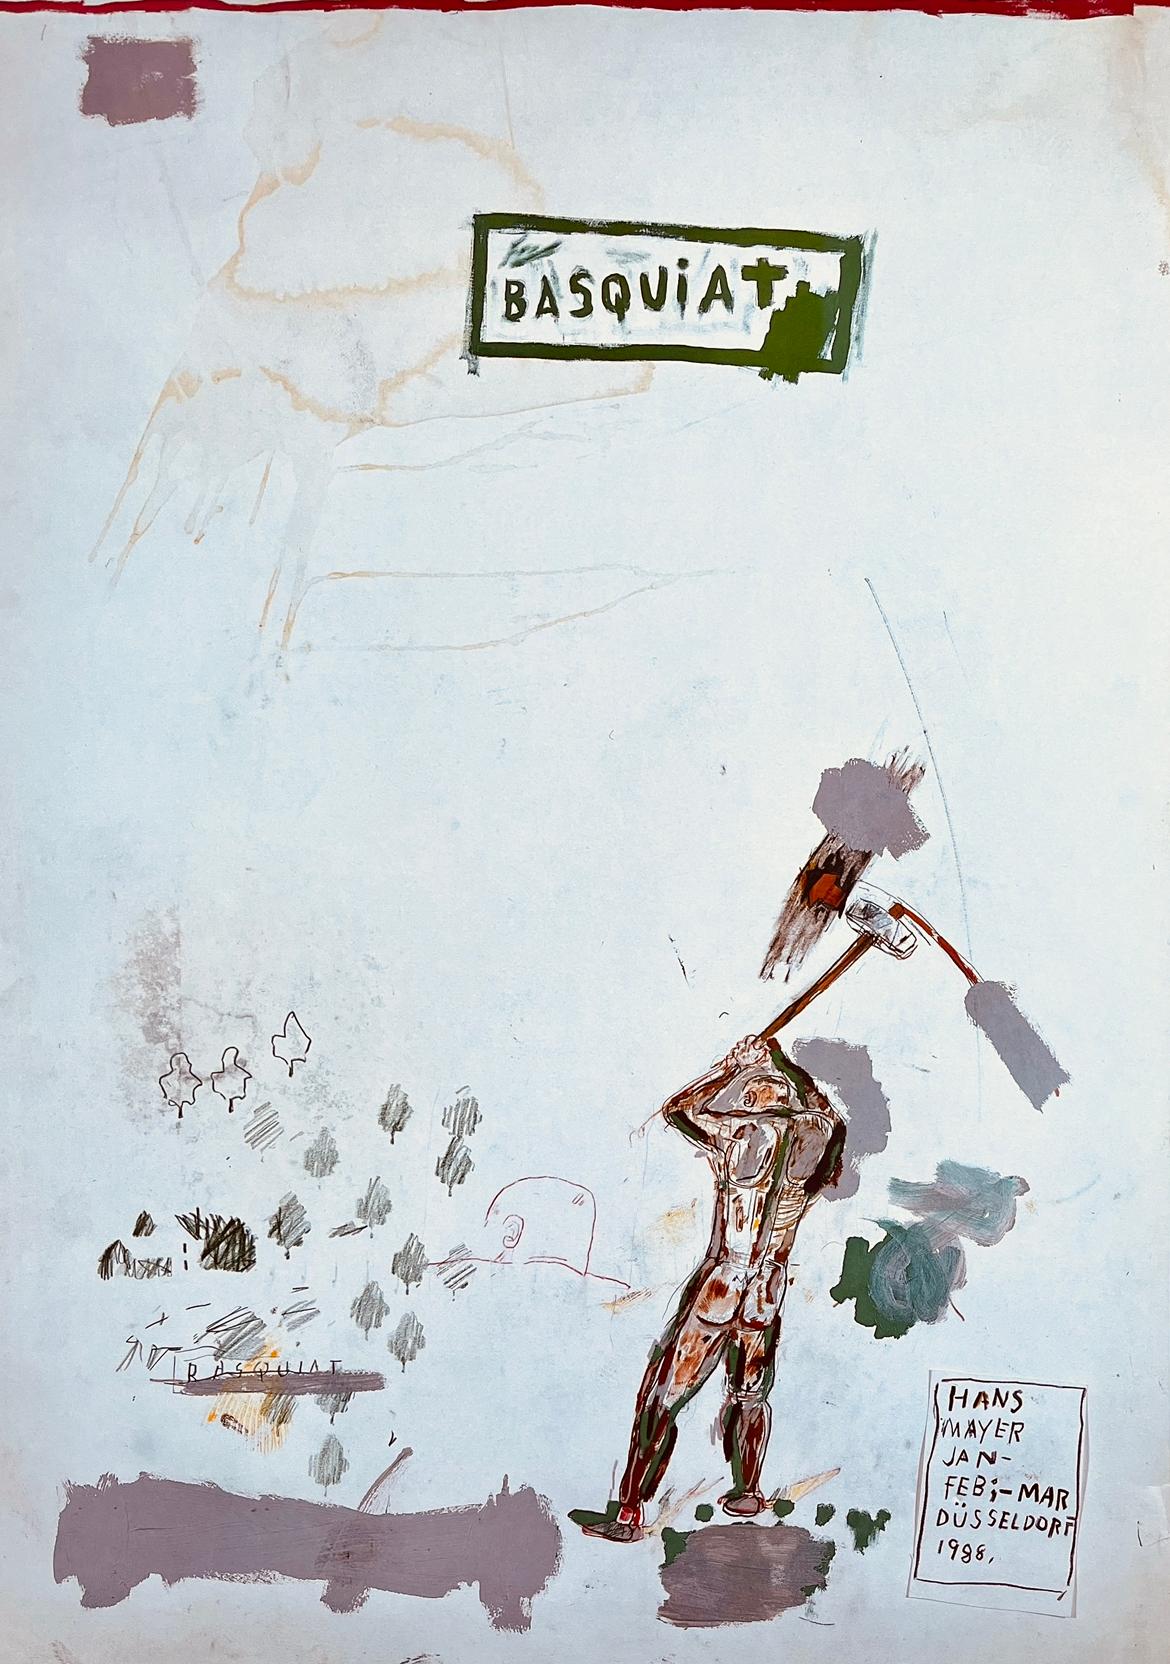 Basquiat Galerie Hans Mayer 1988 (1980s Basquiat exhibition poster) - Print by Jean-Michel Basquiat